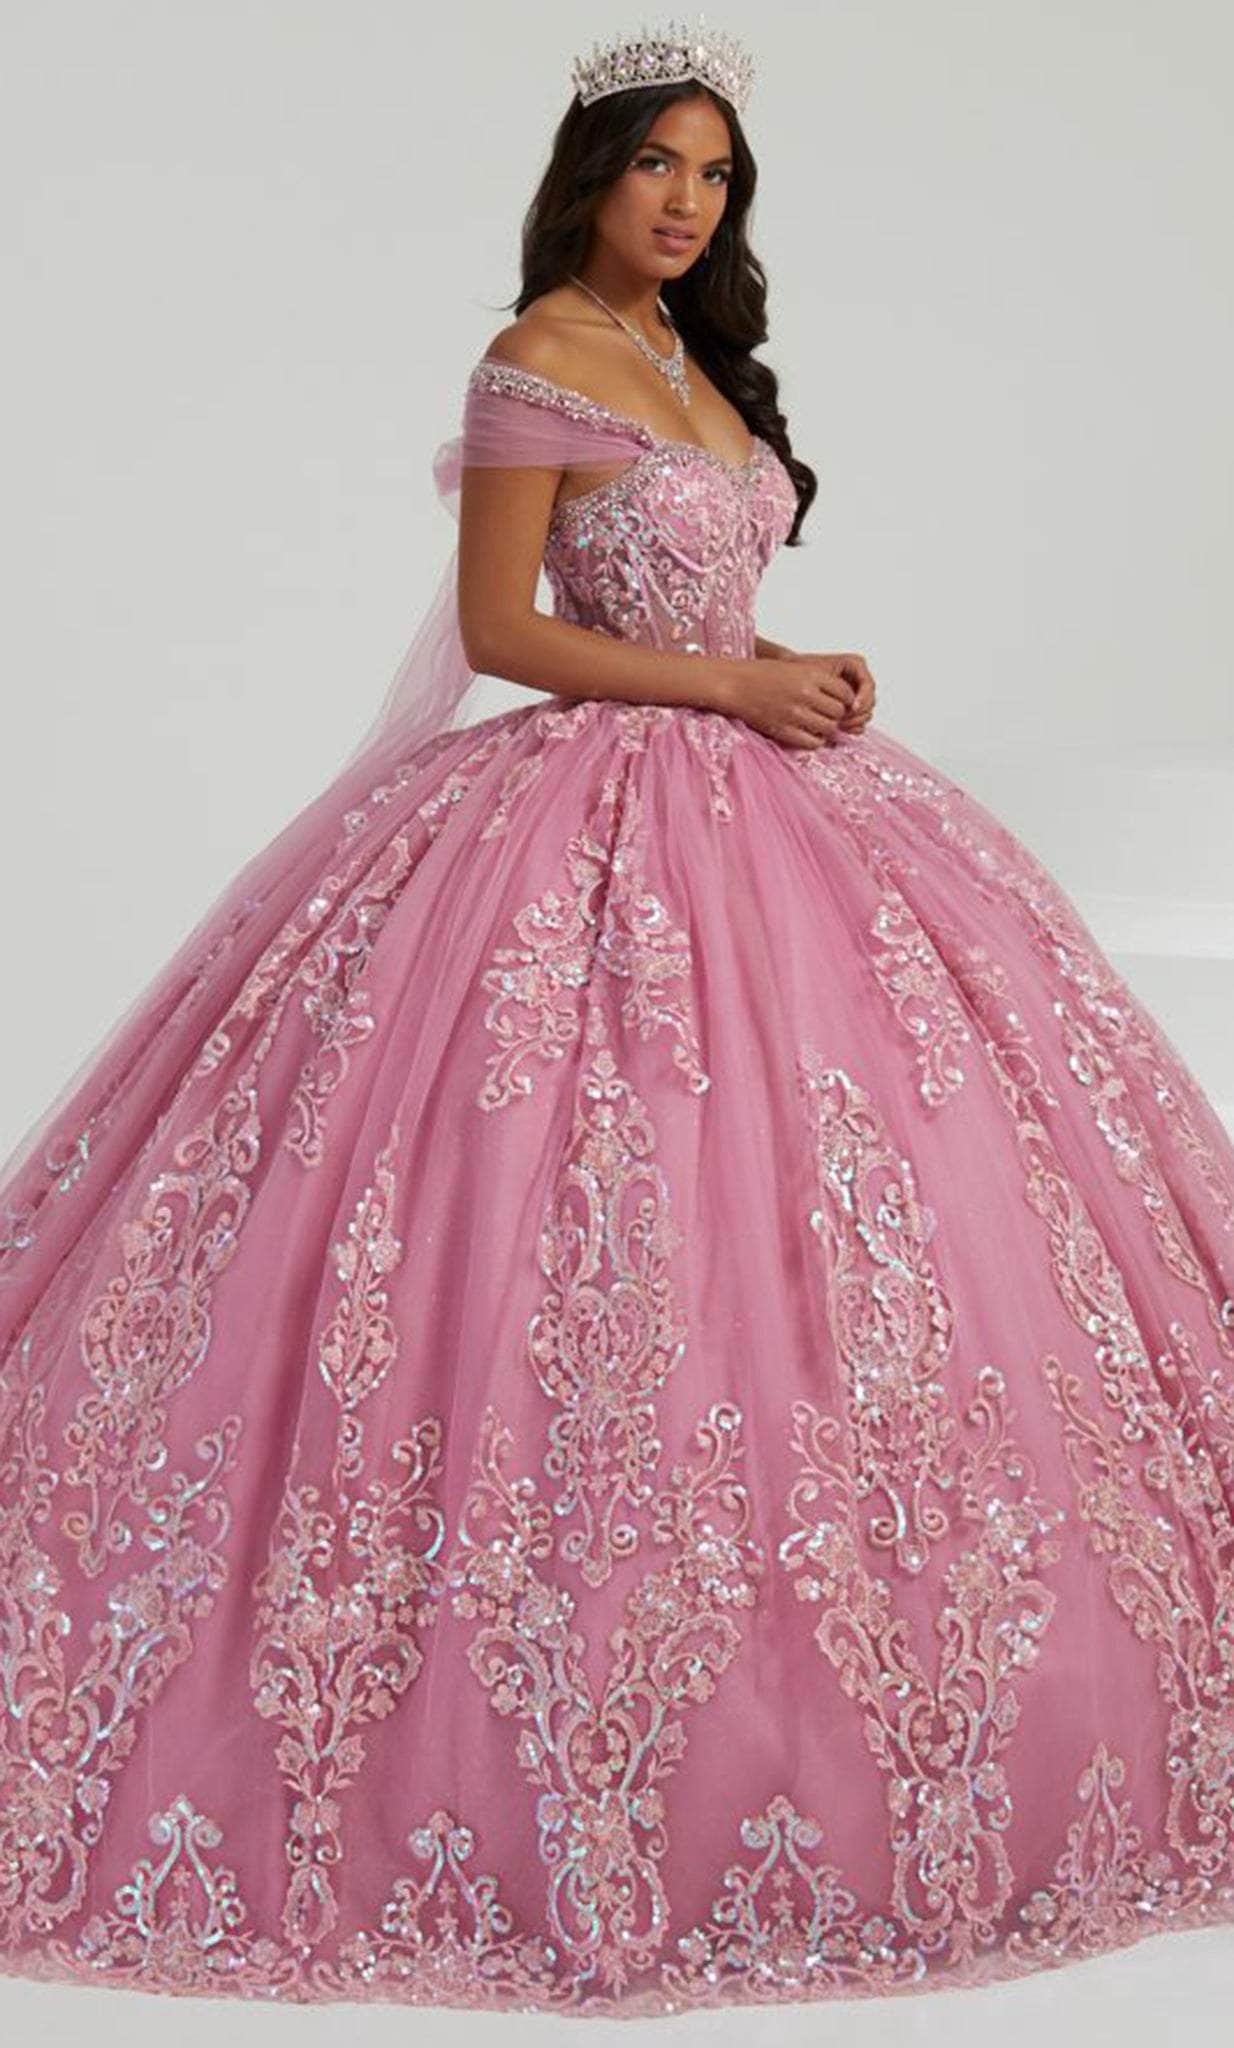 Fiesta Gowns 56476 - Sequined Quinceanera Ballgown
